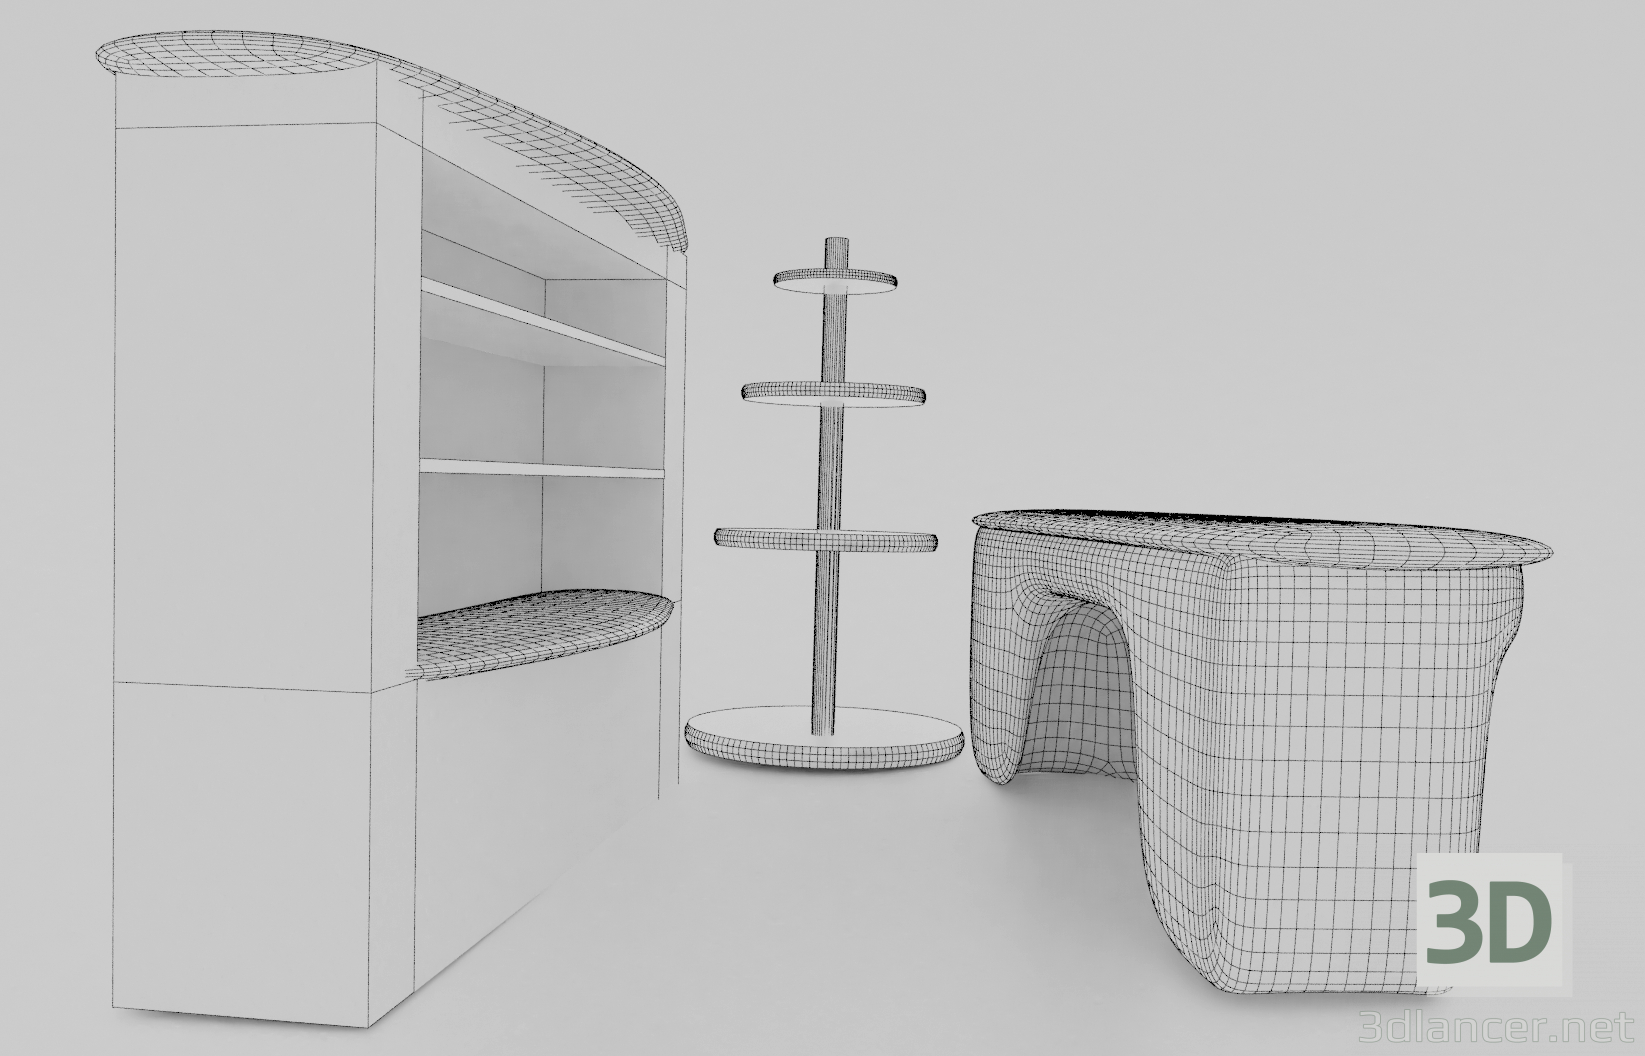 modèle 3D de Comptoir de bar acheter - rendu